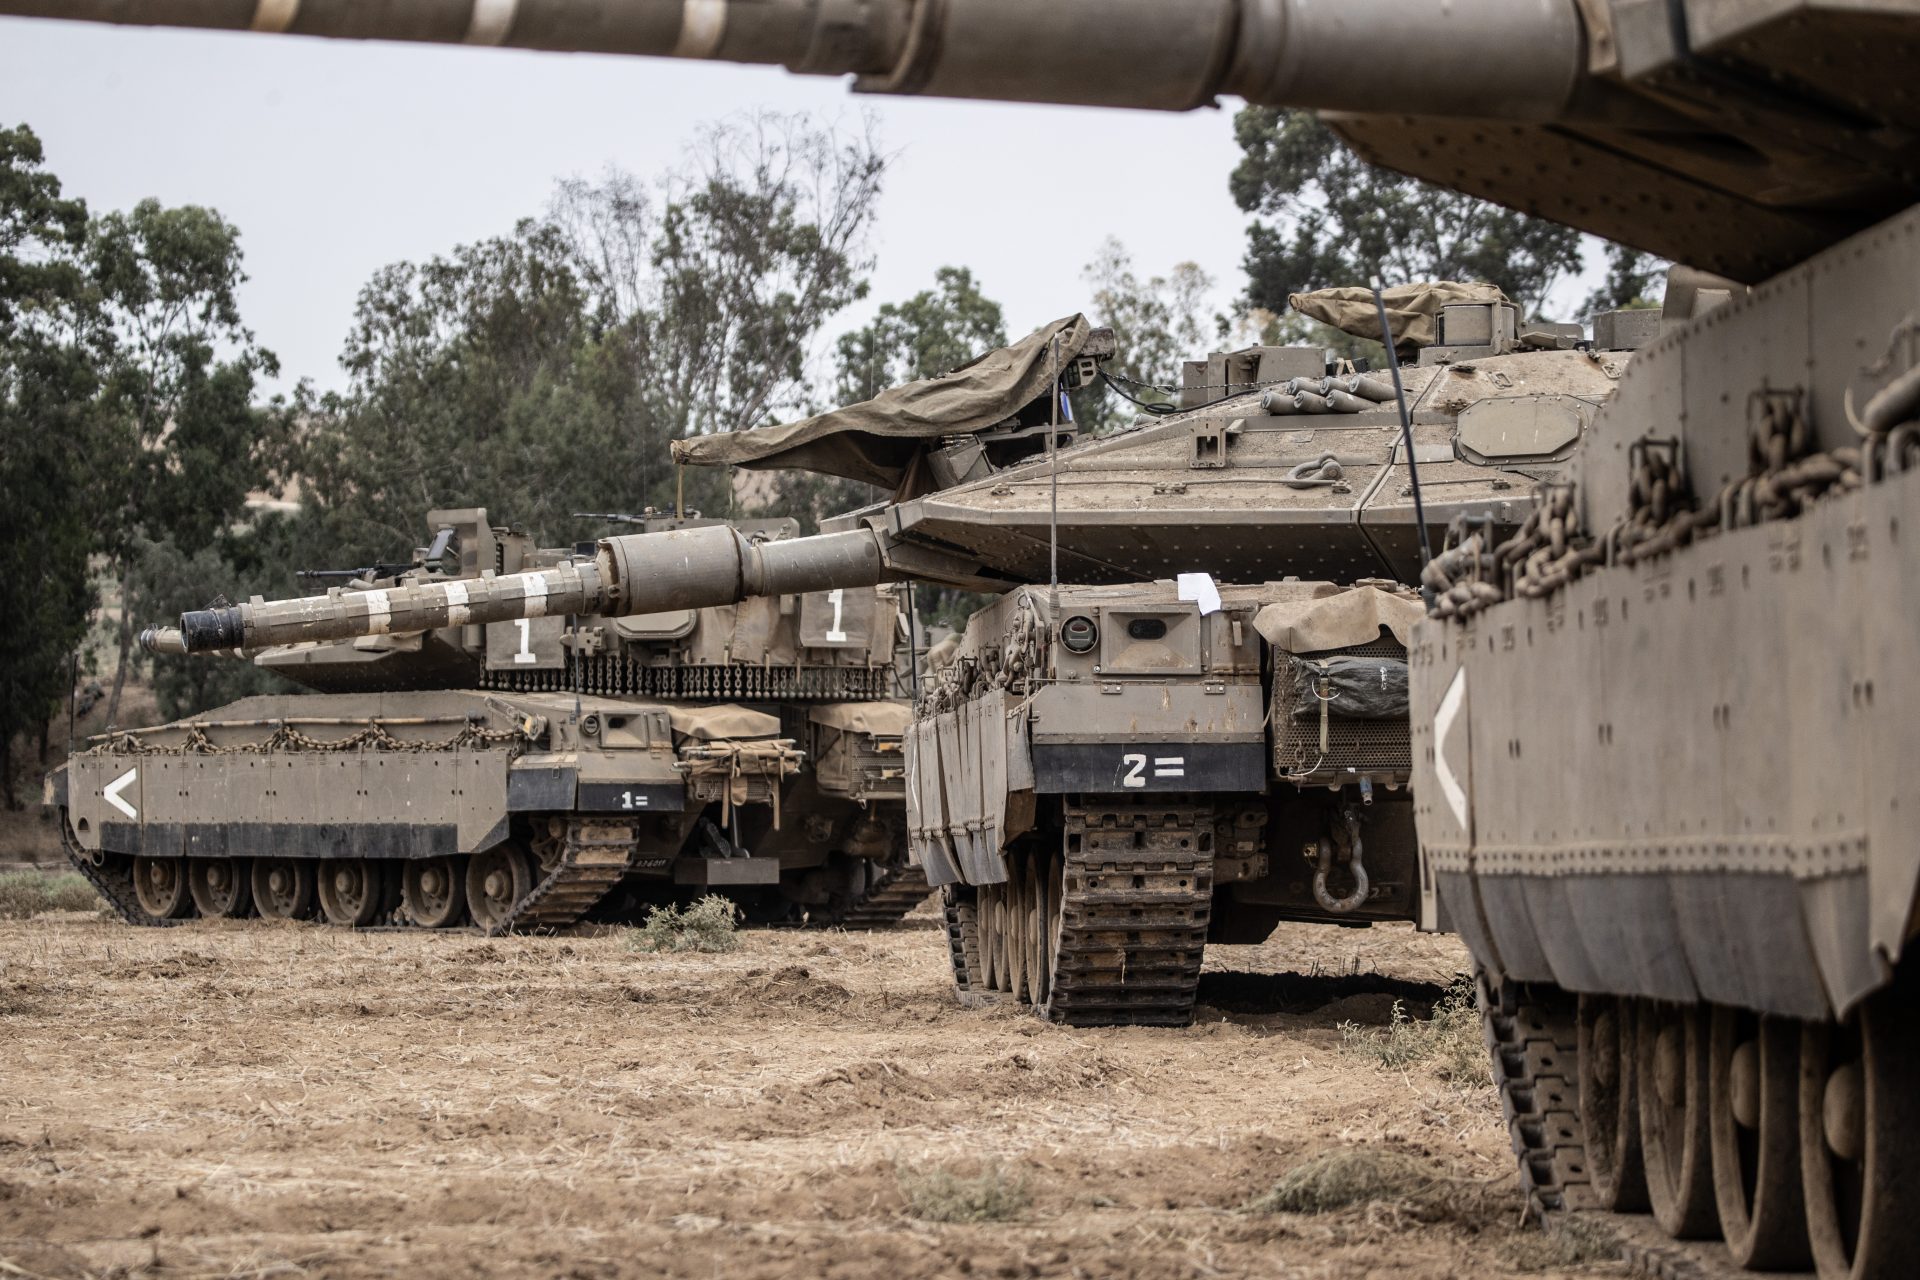 Israeli’s U.S. emergency weapons stockpiles 